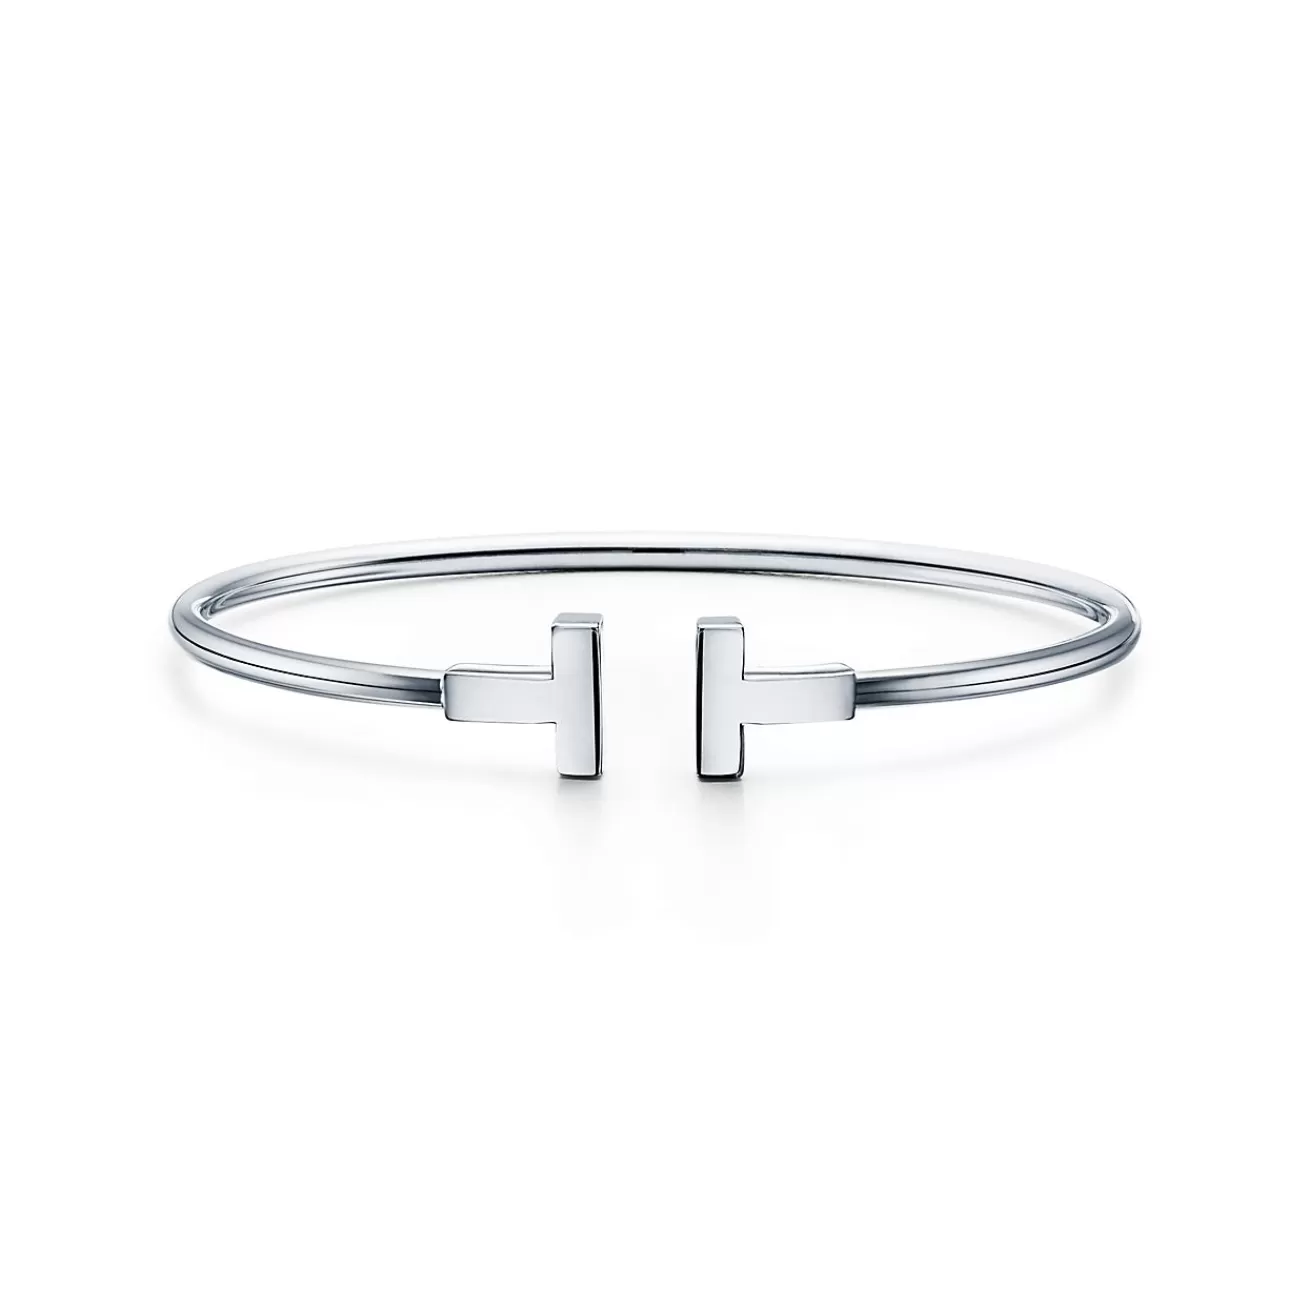 Tiffany & Co. Tiffany T wire bracelet in 18k white gold, medium. | ^ Bracelets | Tiffany T